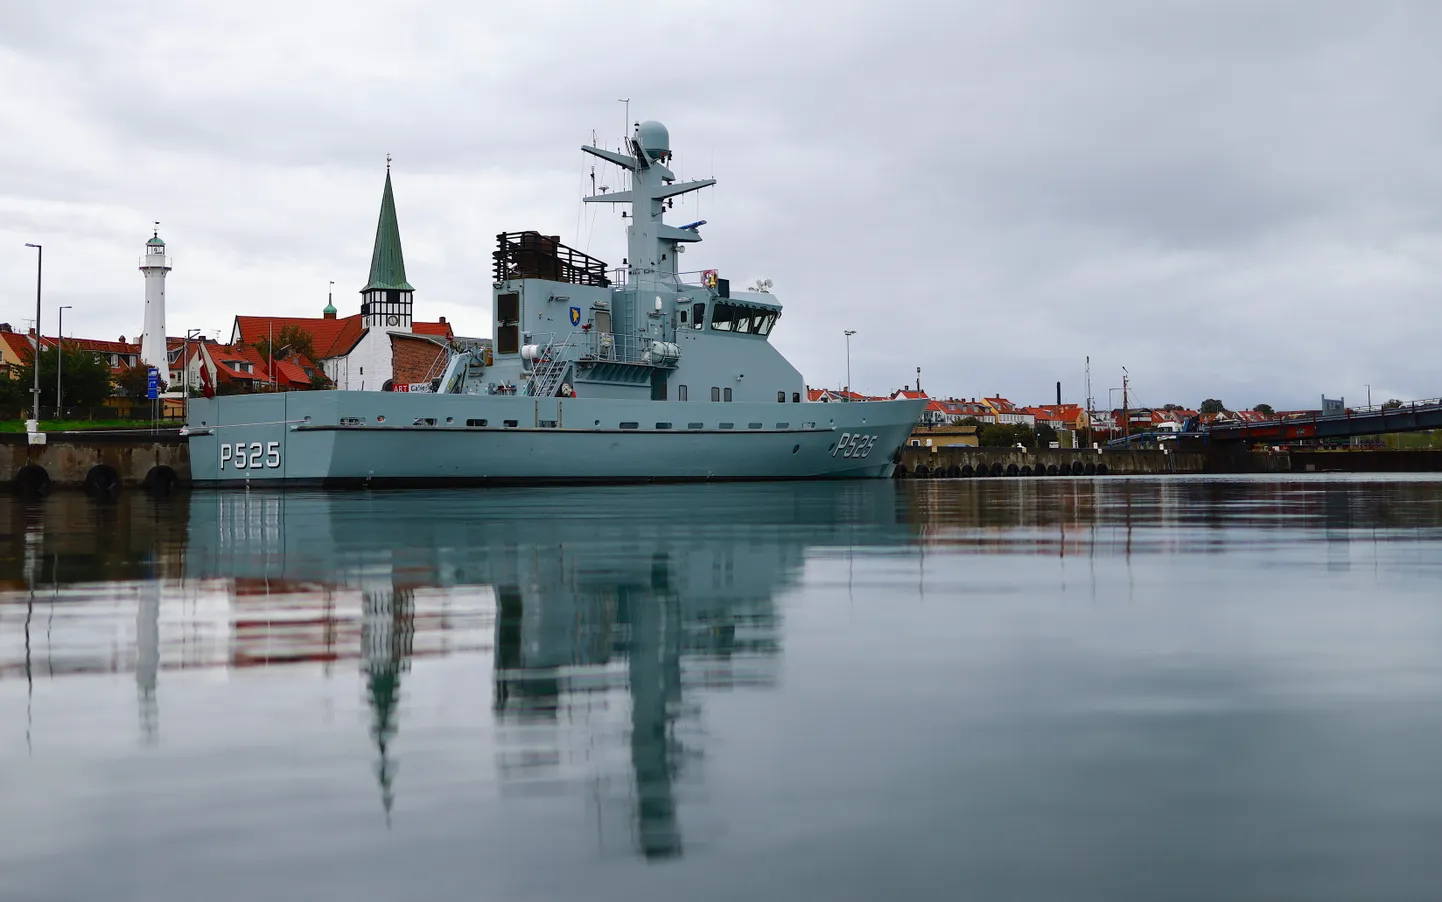 Taani sõjaväe alus Bornholmi sadamas.